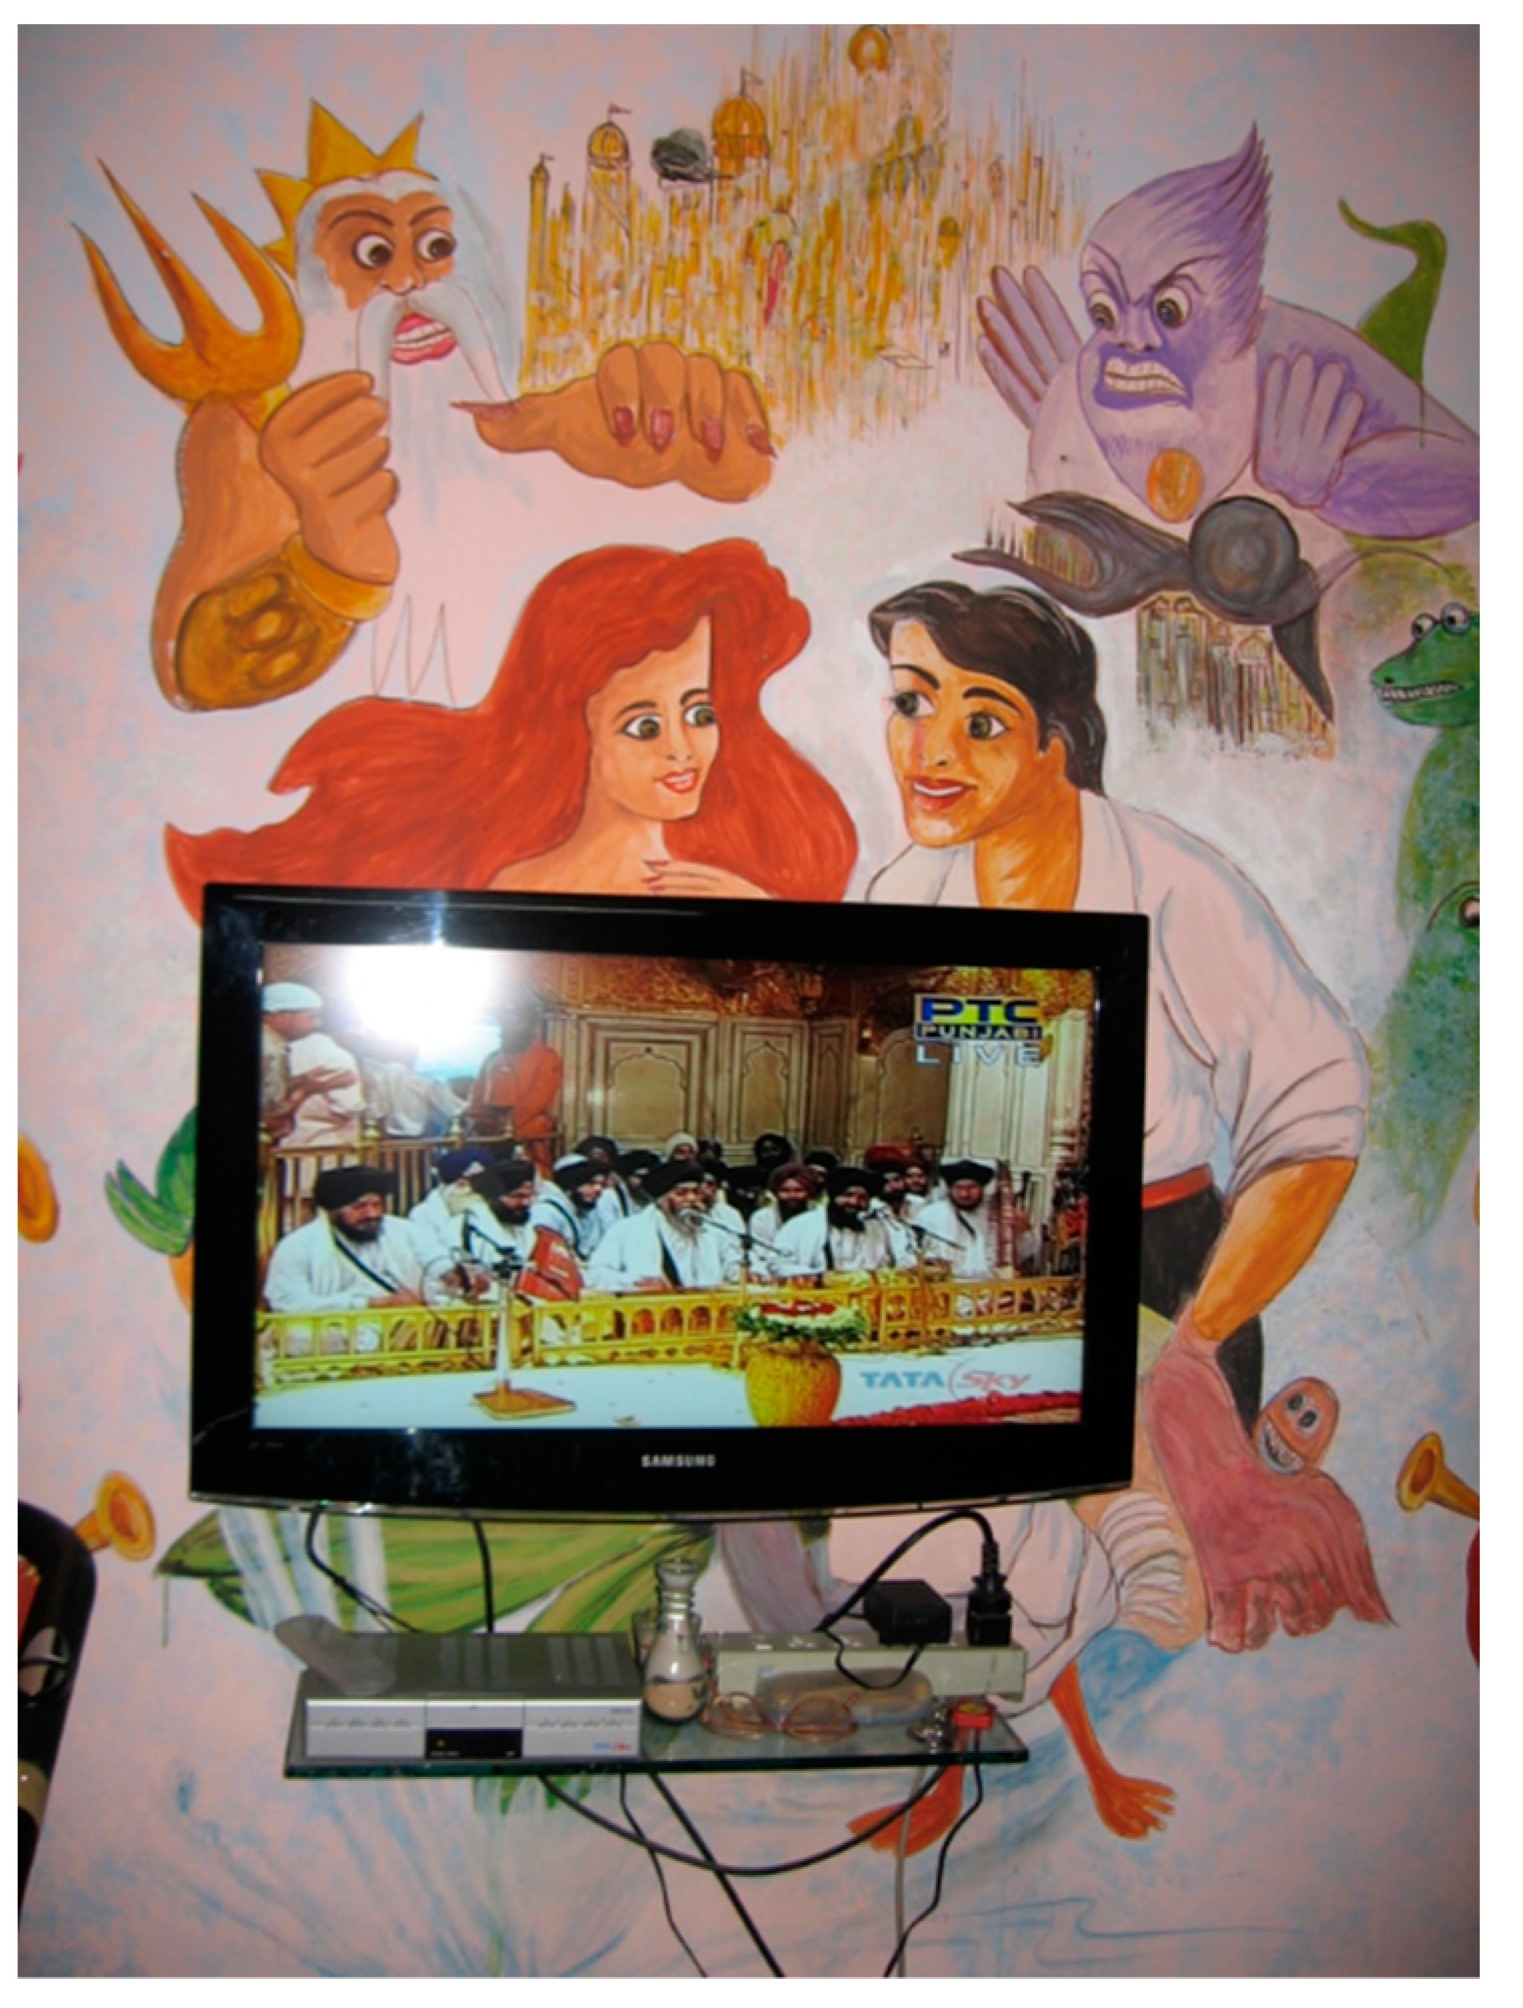 Disney PRINCESSES w/names wall stickers 26 decals Ariel Cinderella Snow  White +